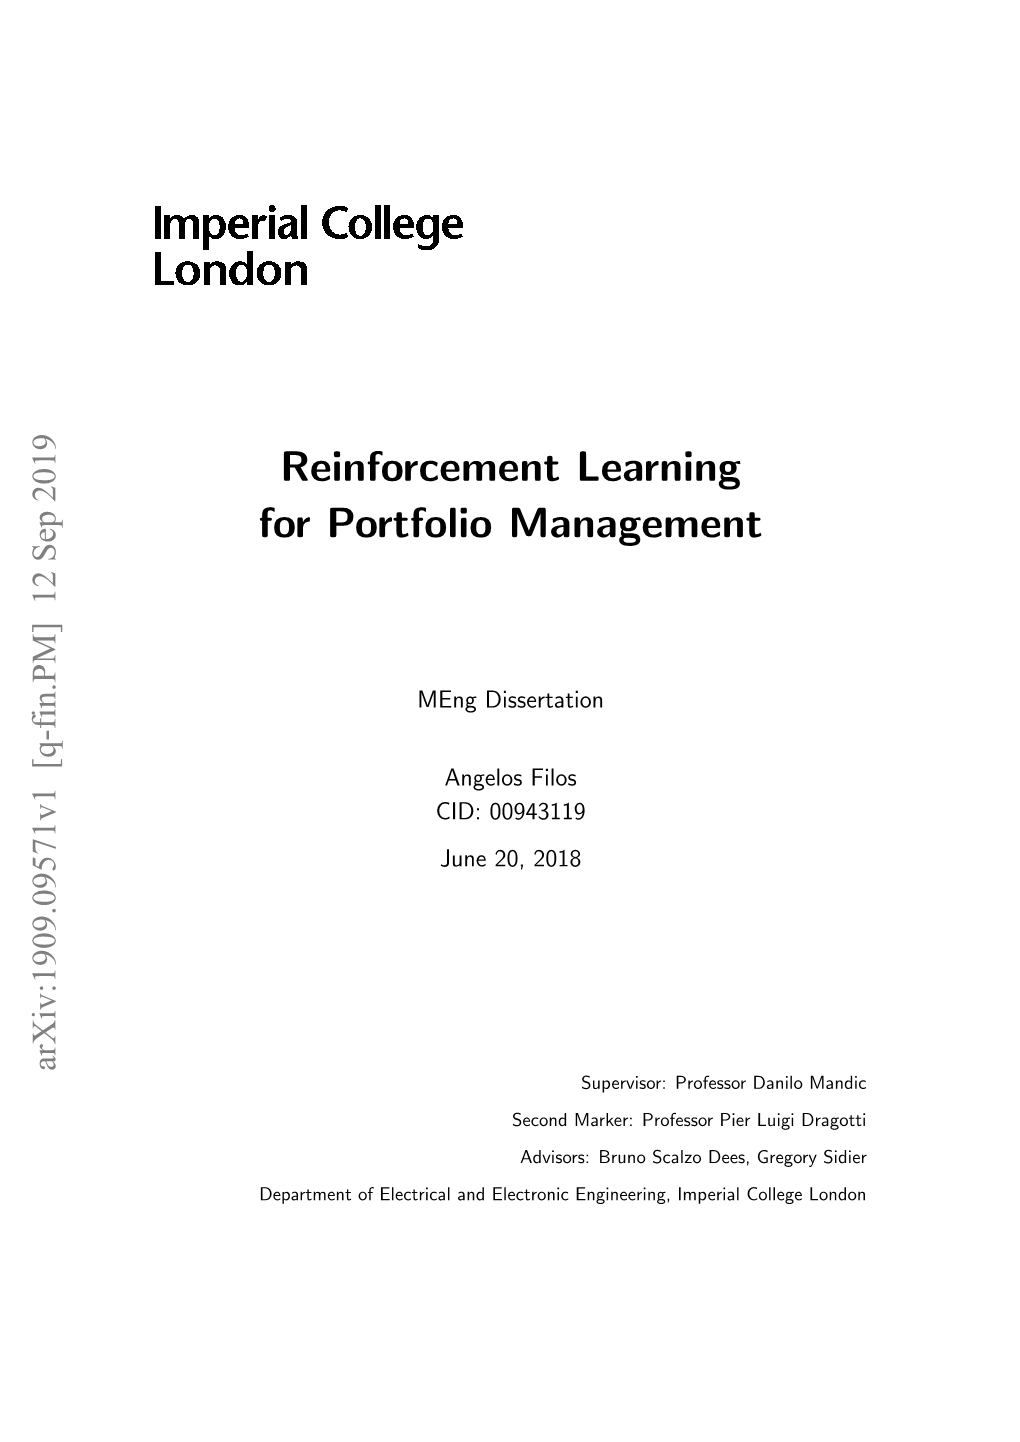 Reinforcement Learning for Portfolio Management